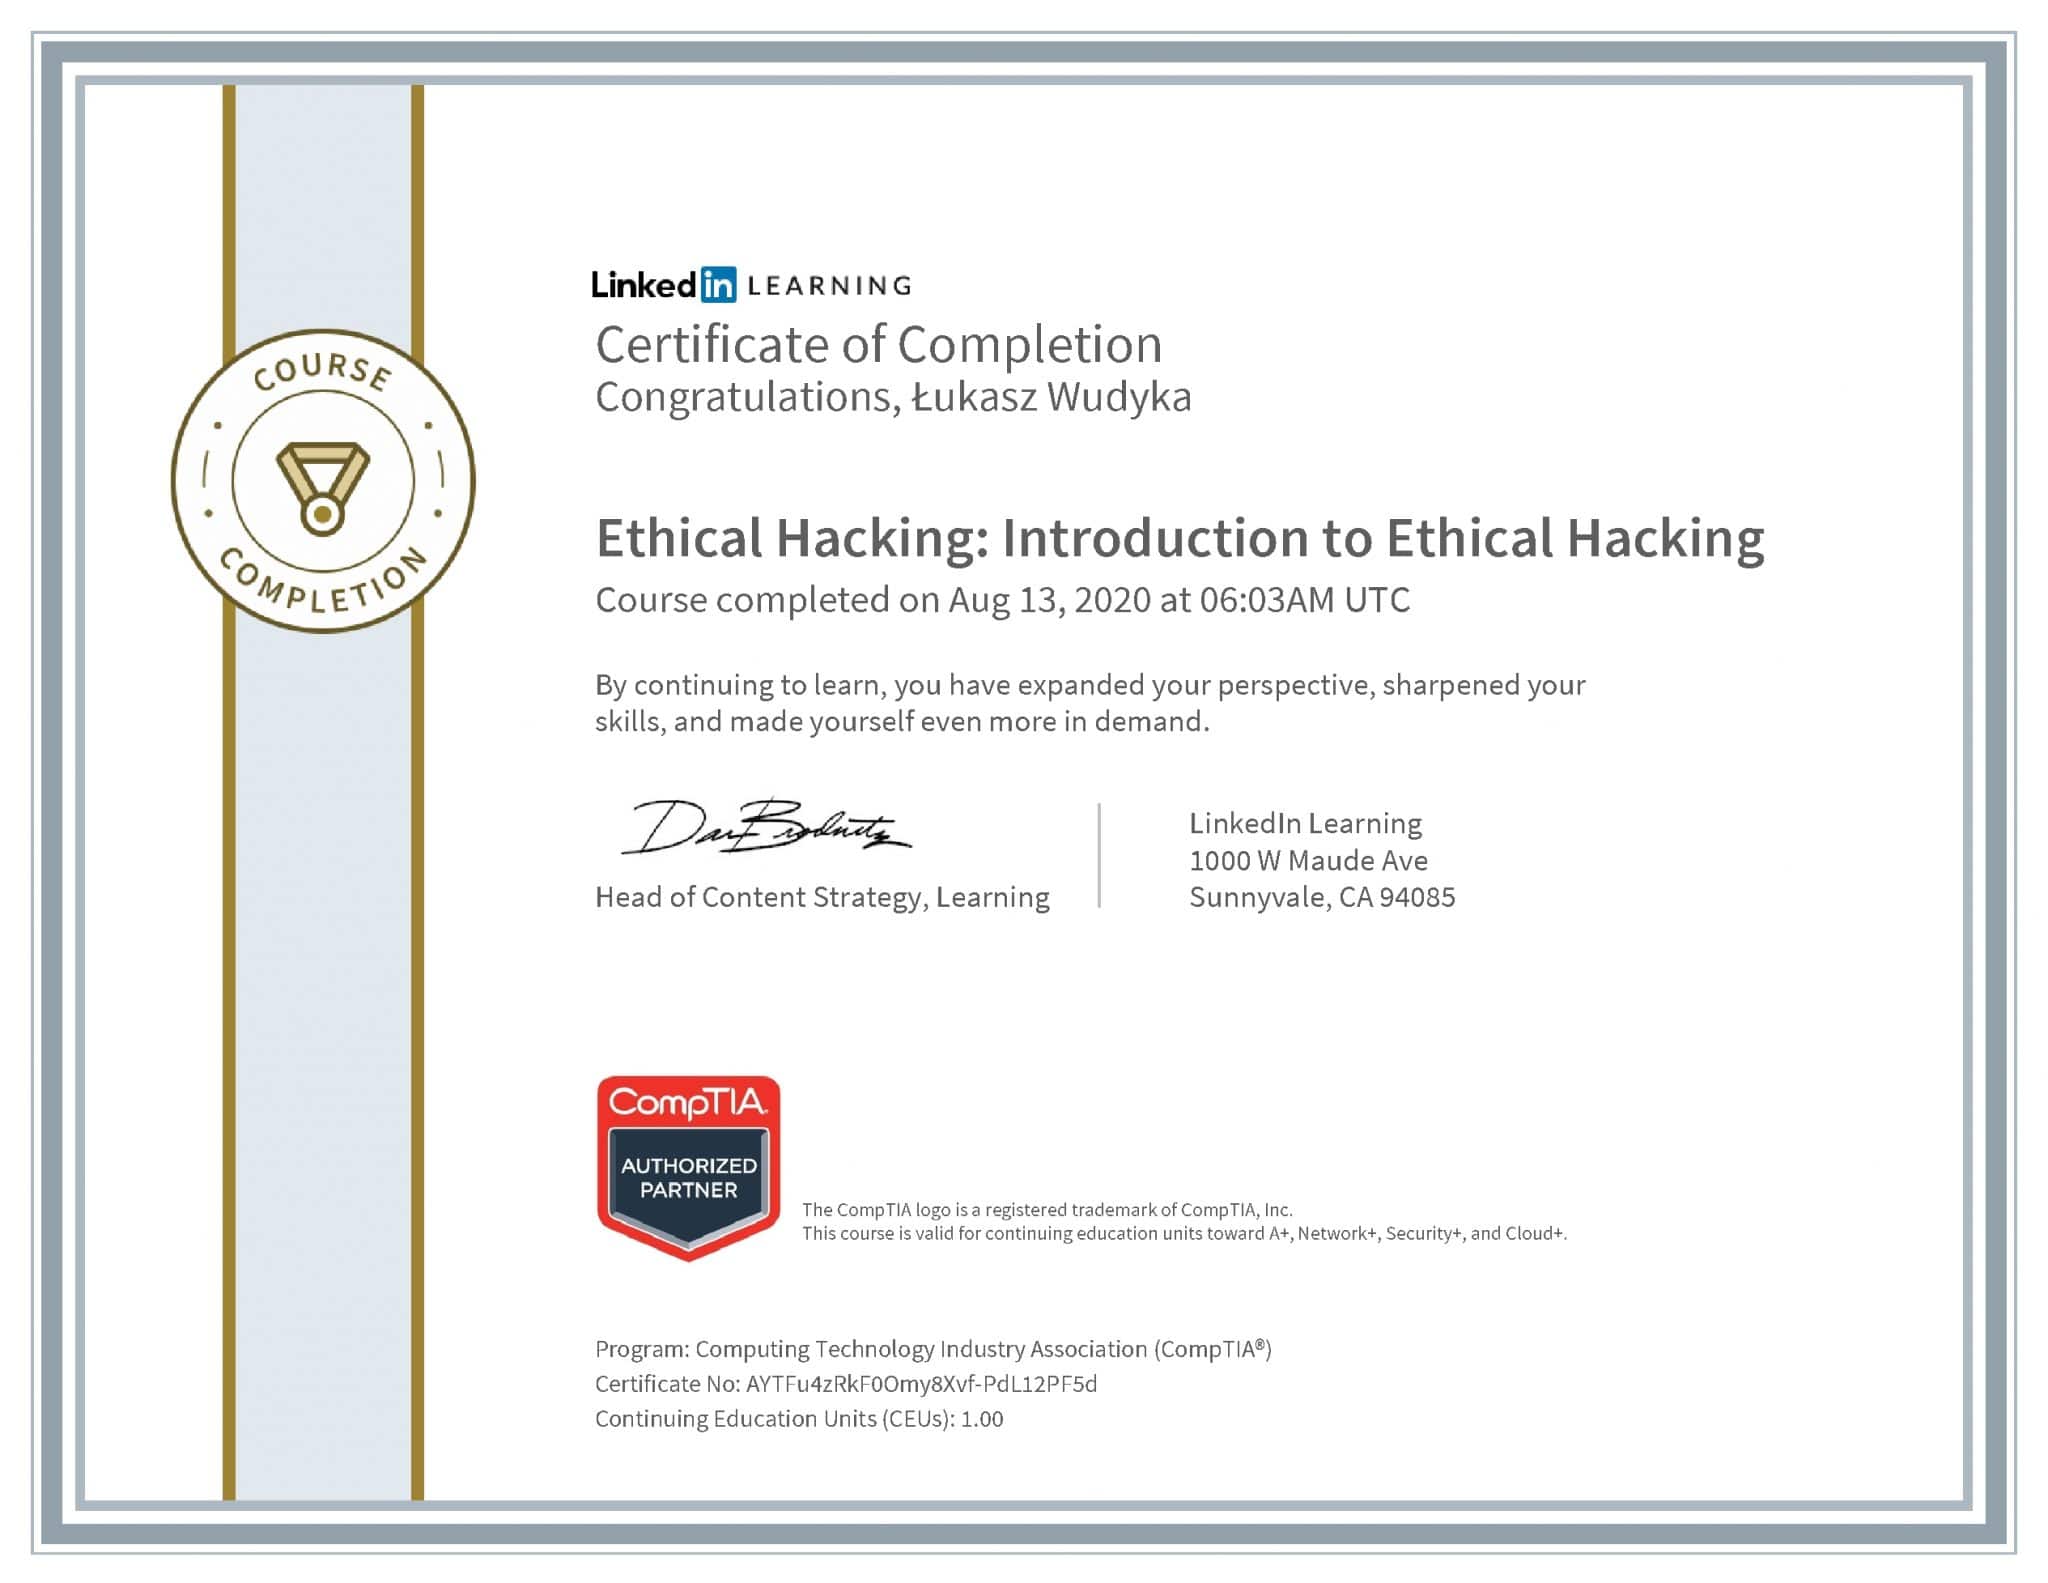 Łukasz Wudyka certyfikat LinkedIn Ethical Hacking: Introduction to Ethical Hacking CompTIA